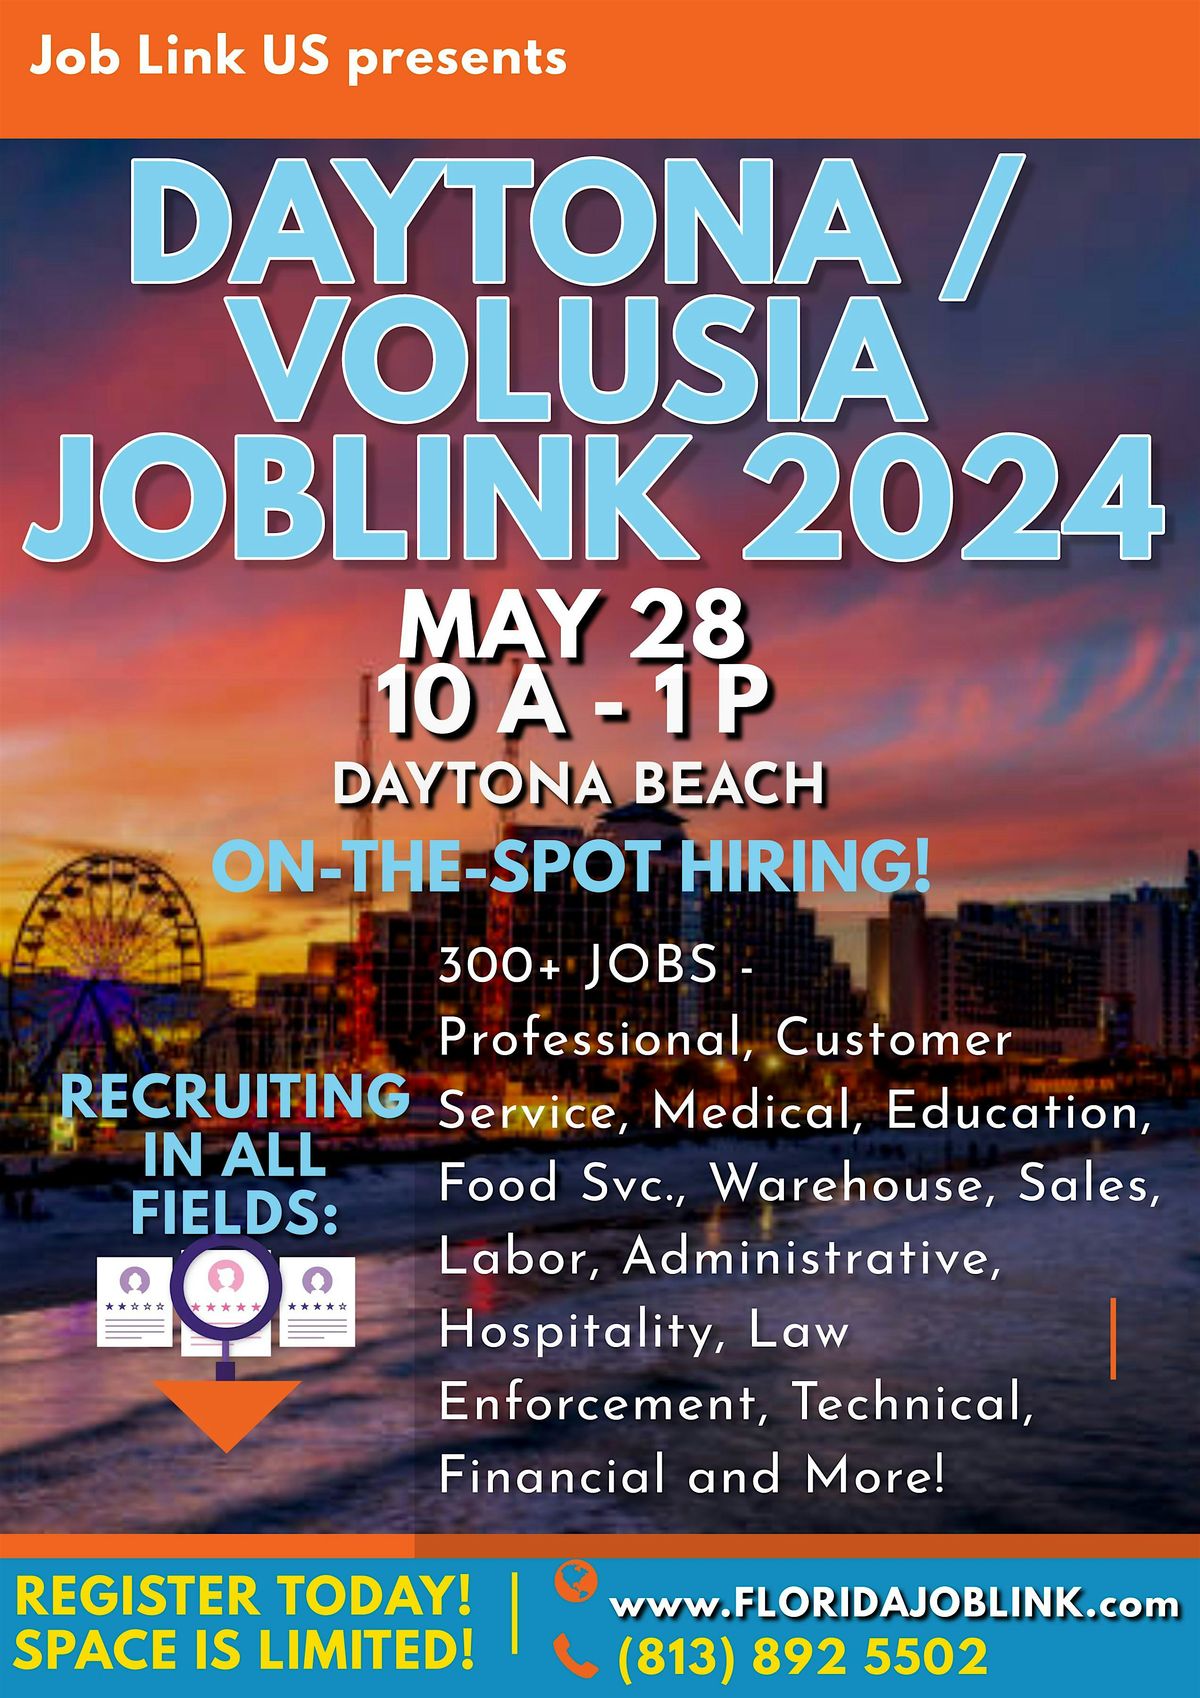 DAYTONA \/ VOLUSIA JOBLINK JOB FAIR - JOB LINK 2024  MAY 28